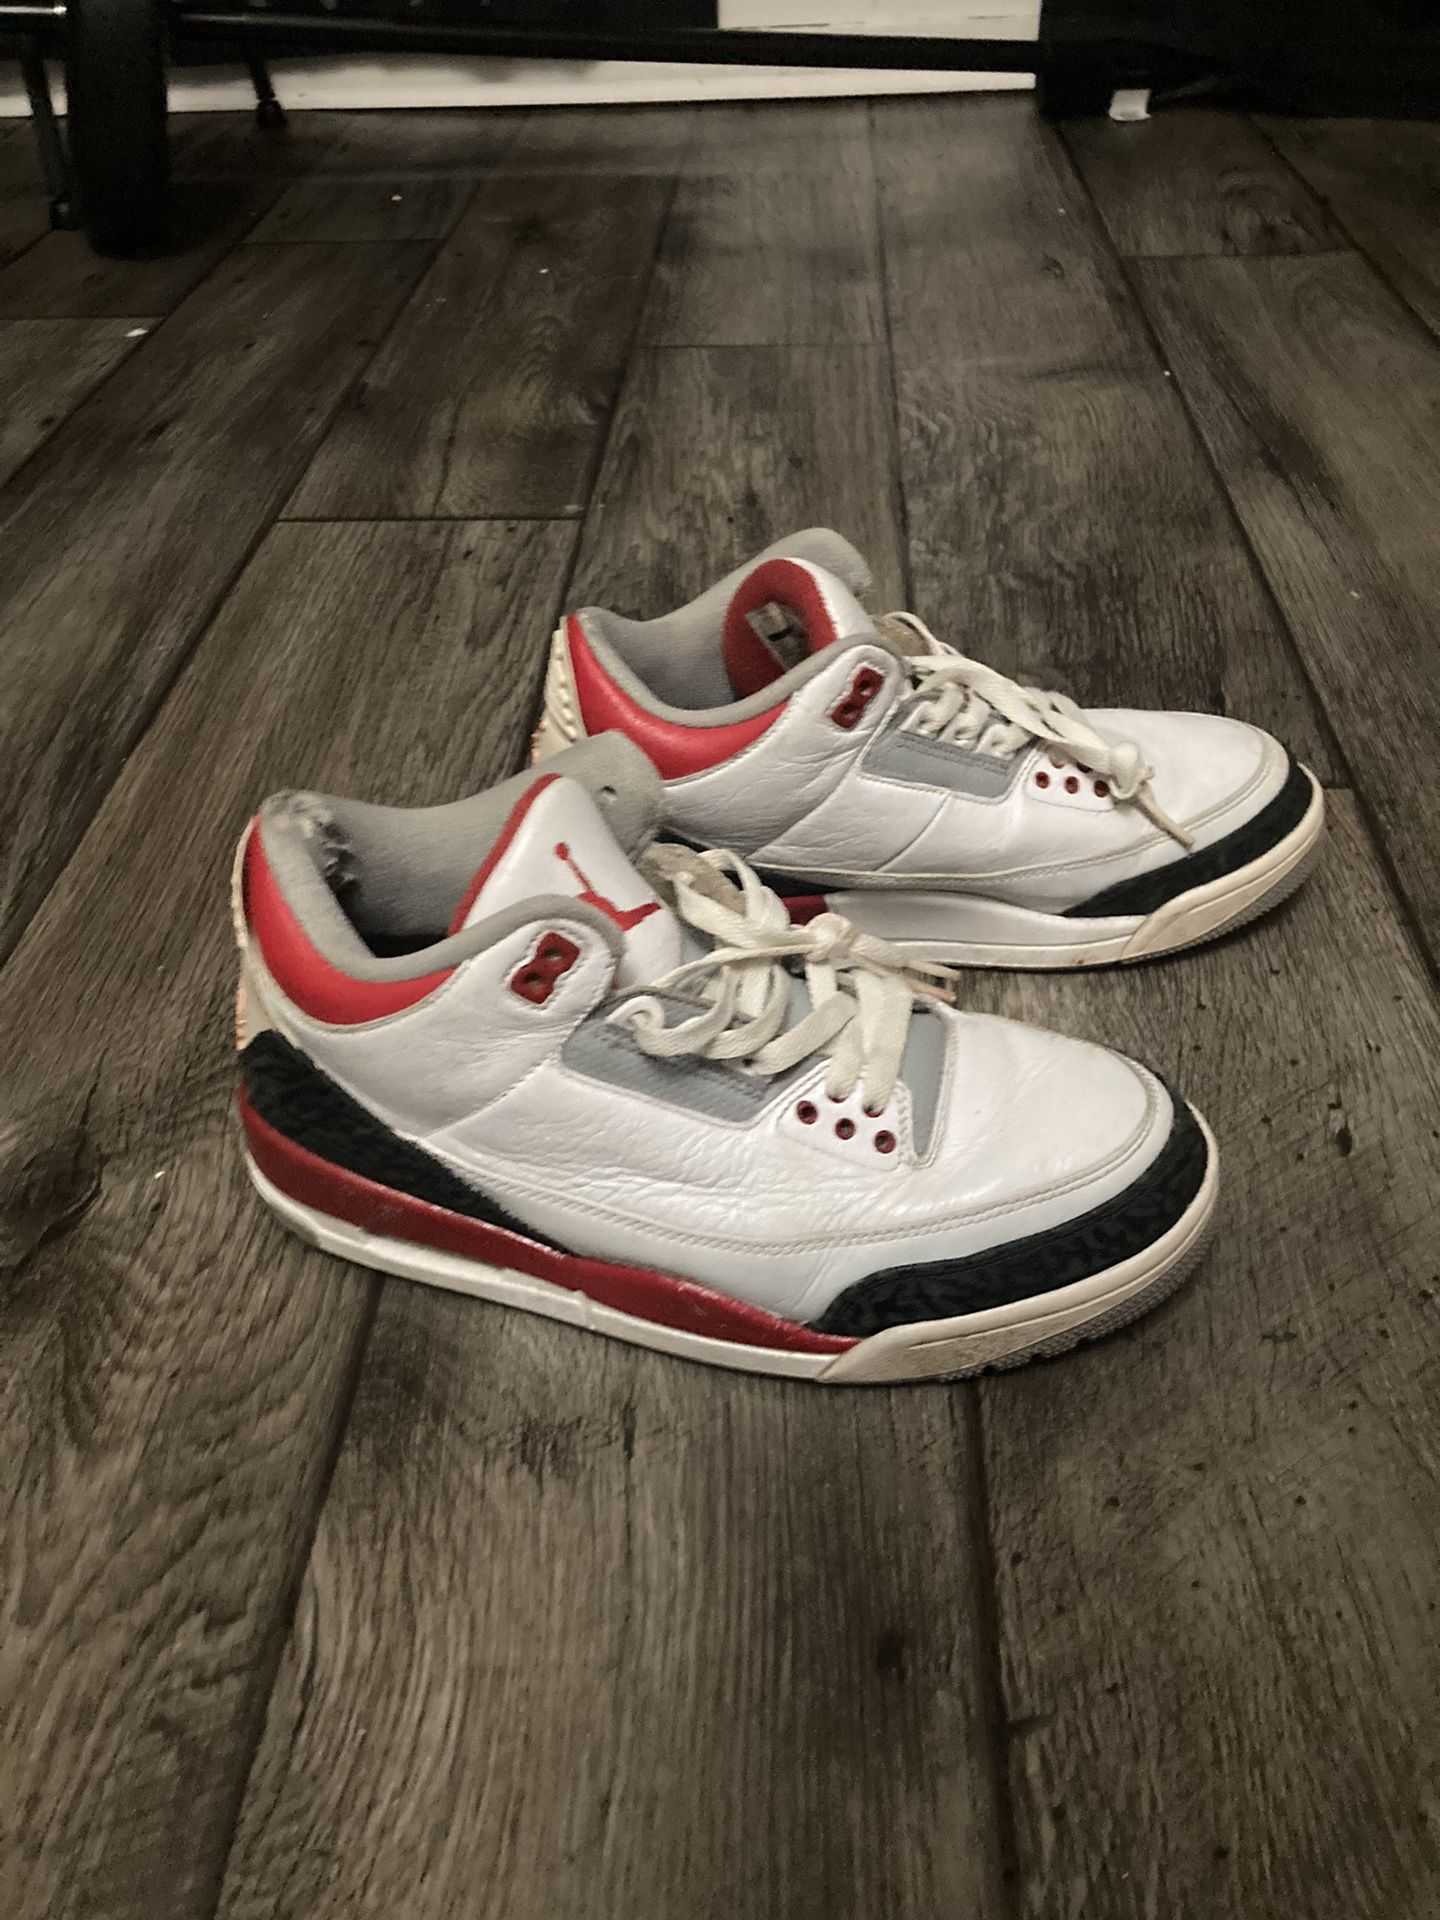 Jordan 3 ‘Fire Red’ 2013